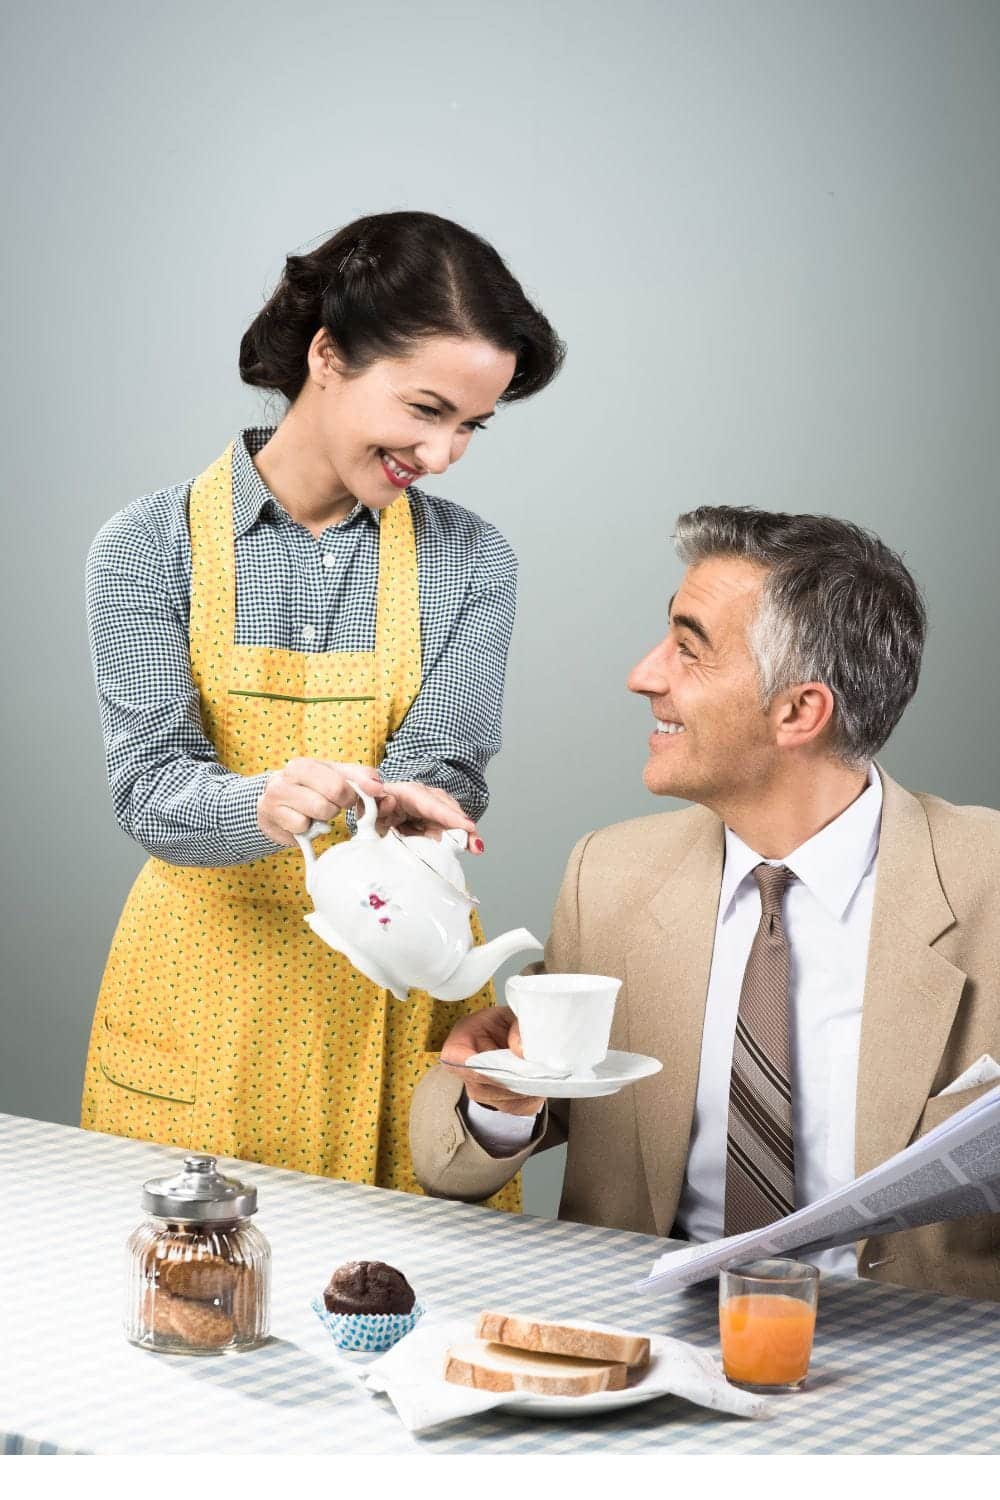 Smiling woman pours tea for man wearing suit.